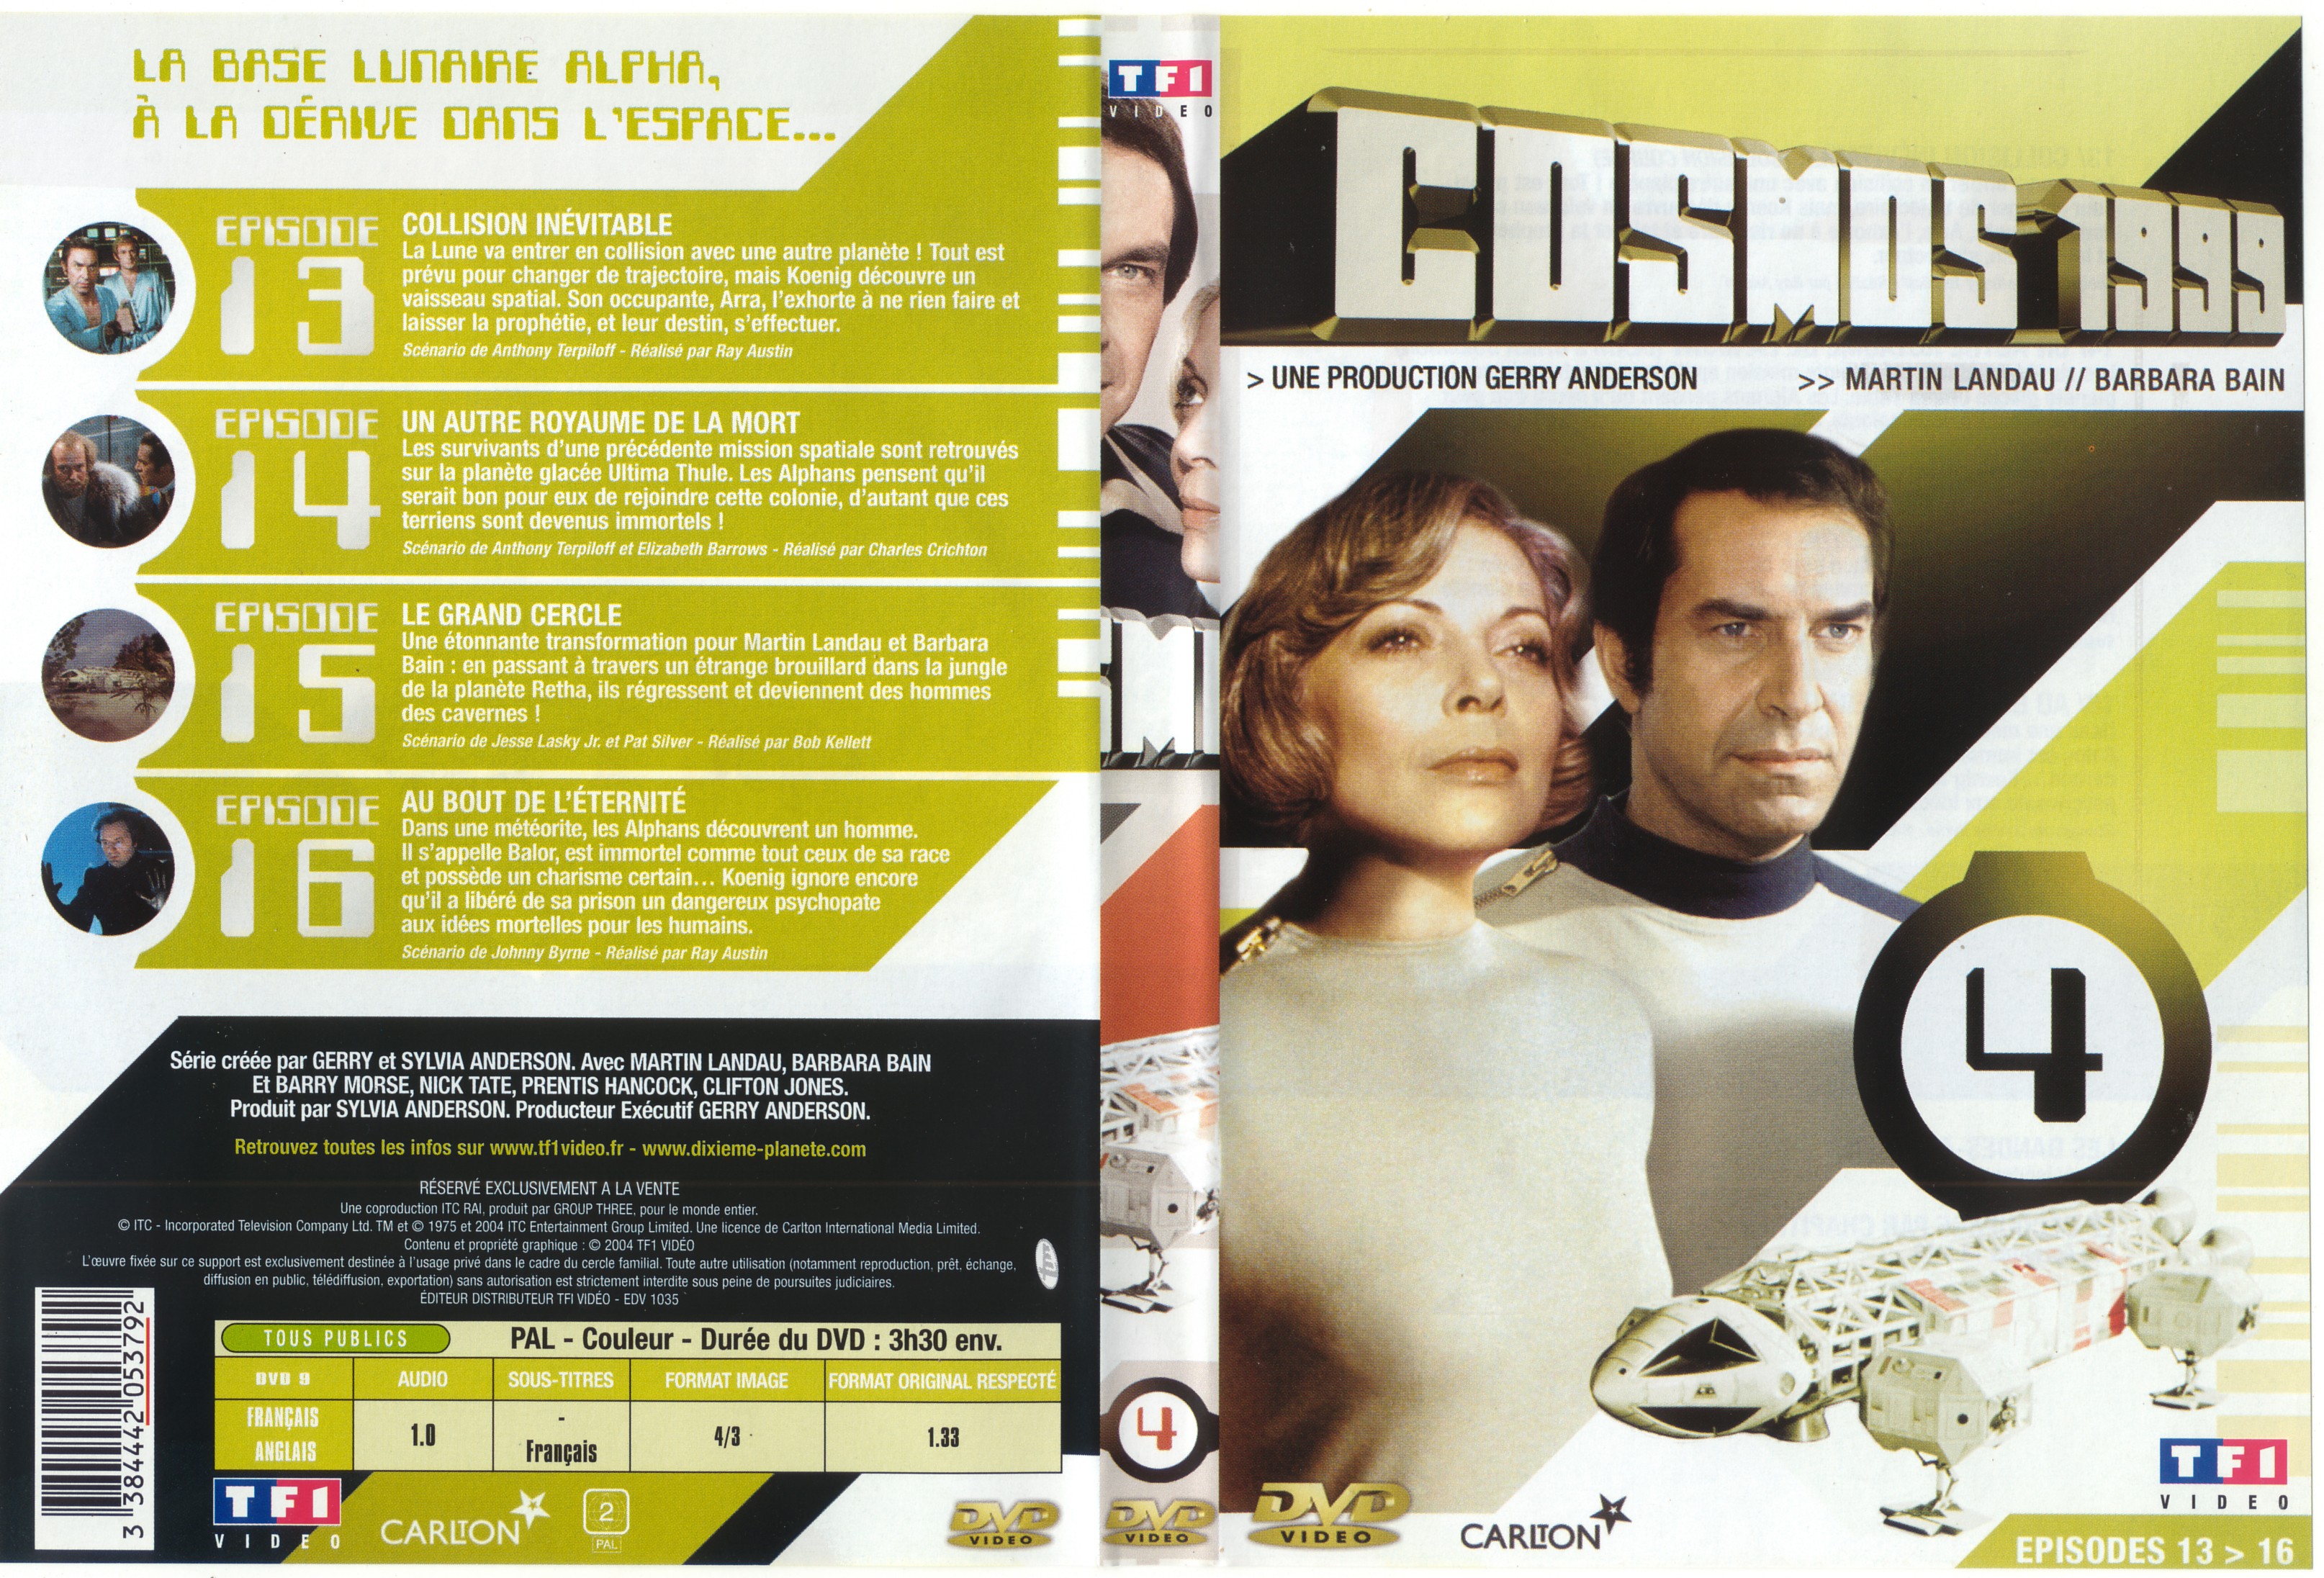 Jaquette DVD Cosmos 1999 saison 1 dvd 4